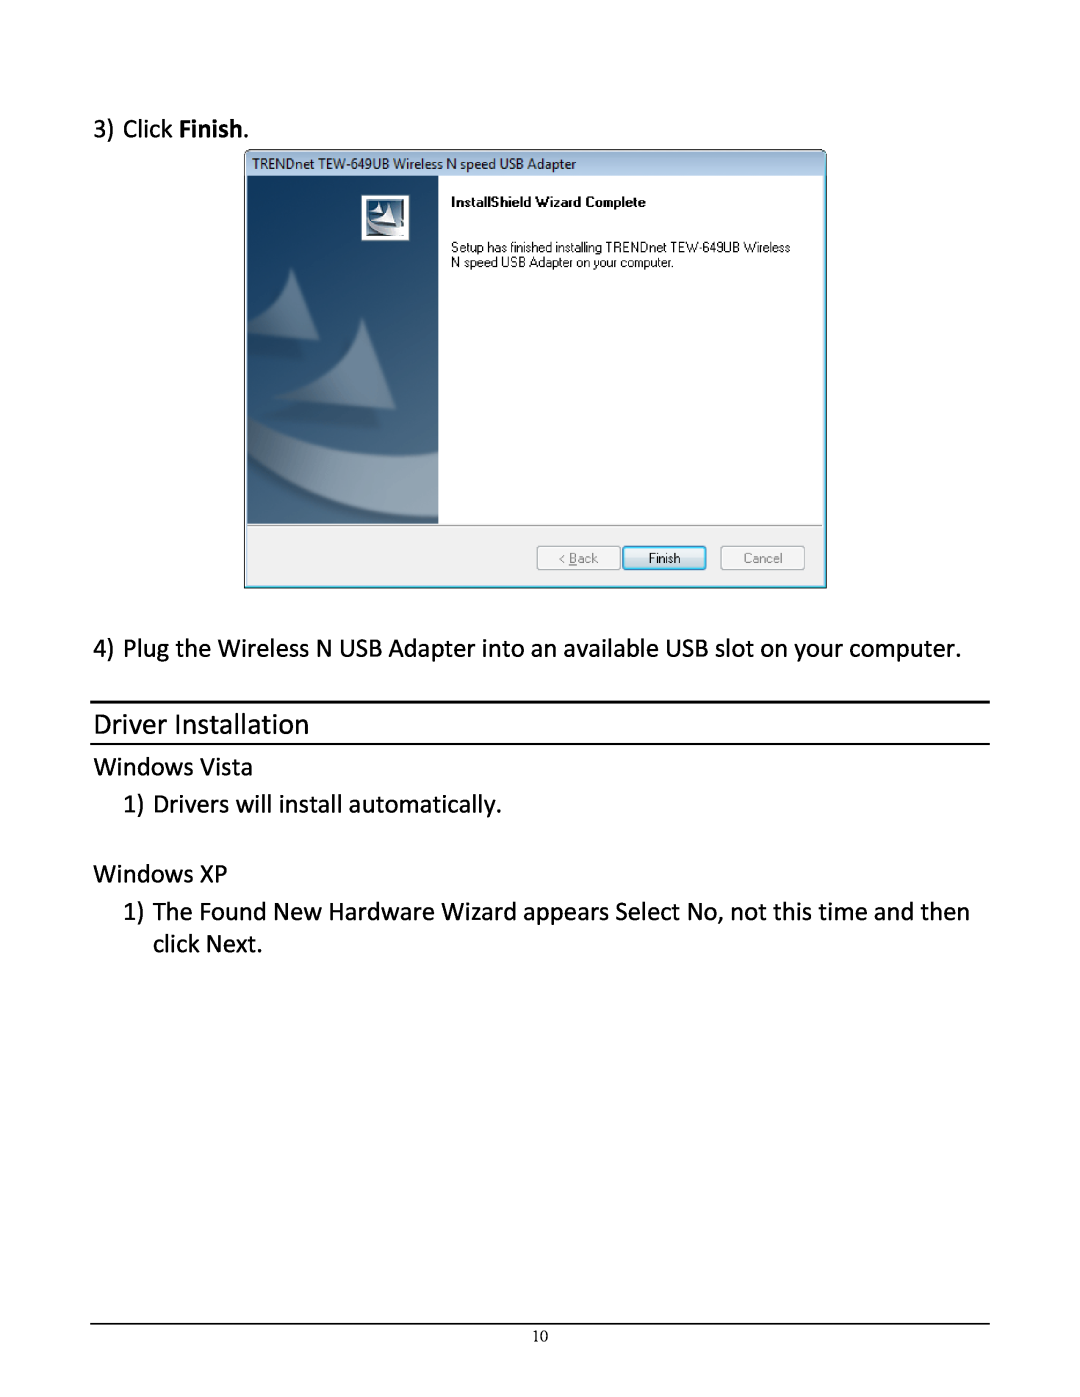 TRENDnet TEW-649UB manual Driver Installation, Click Finish, Windows Vista 1 Drivers will install automatically Windows XP 